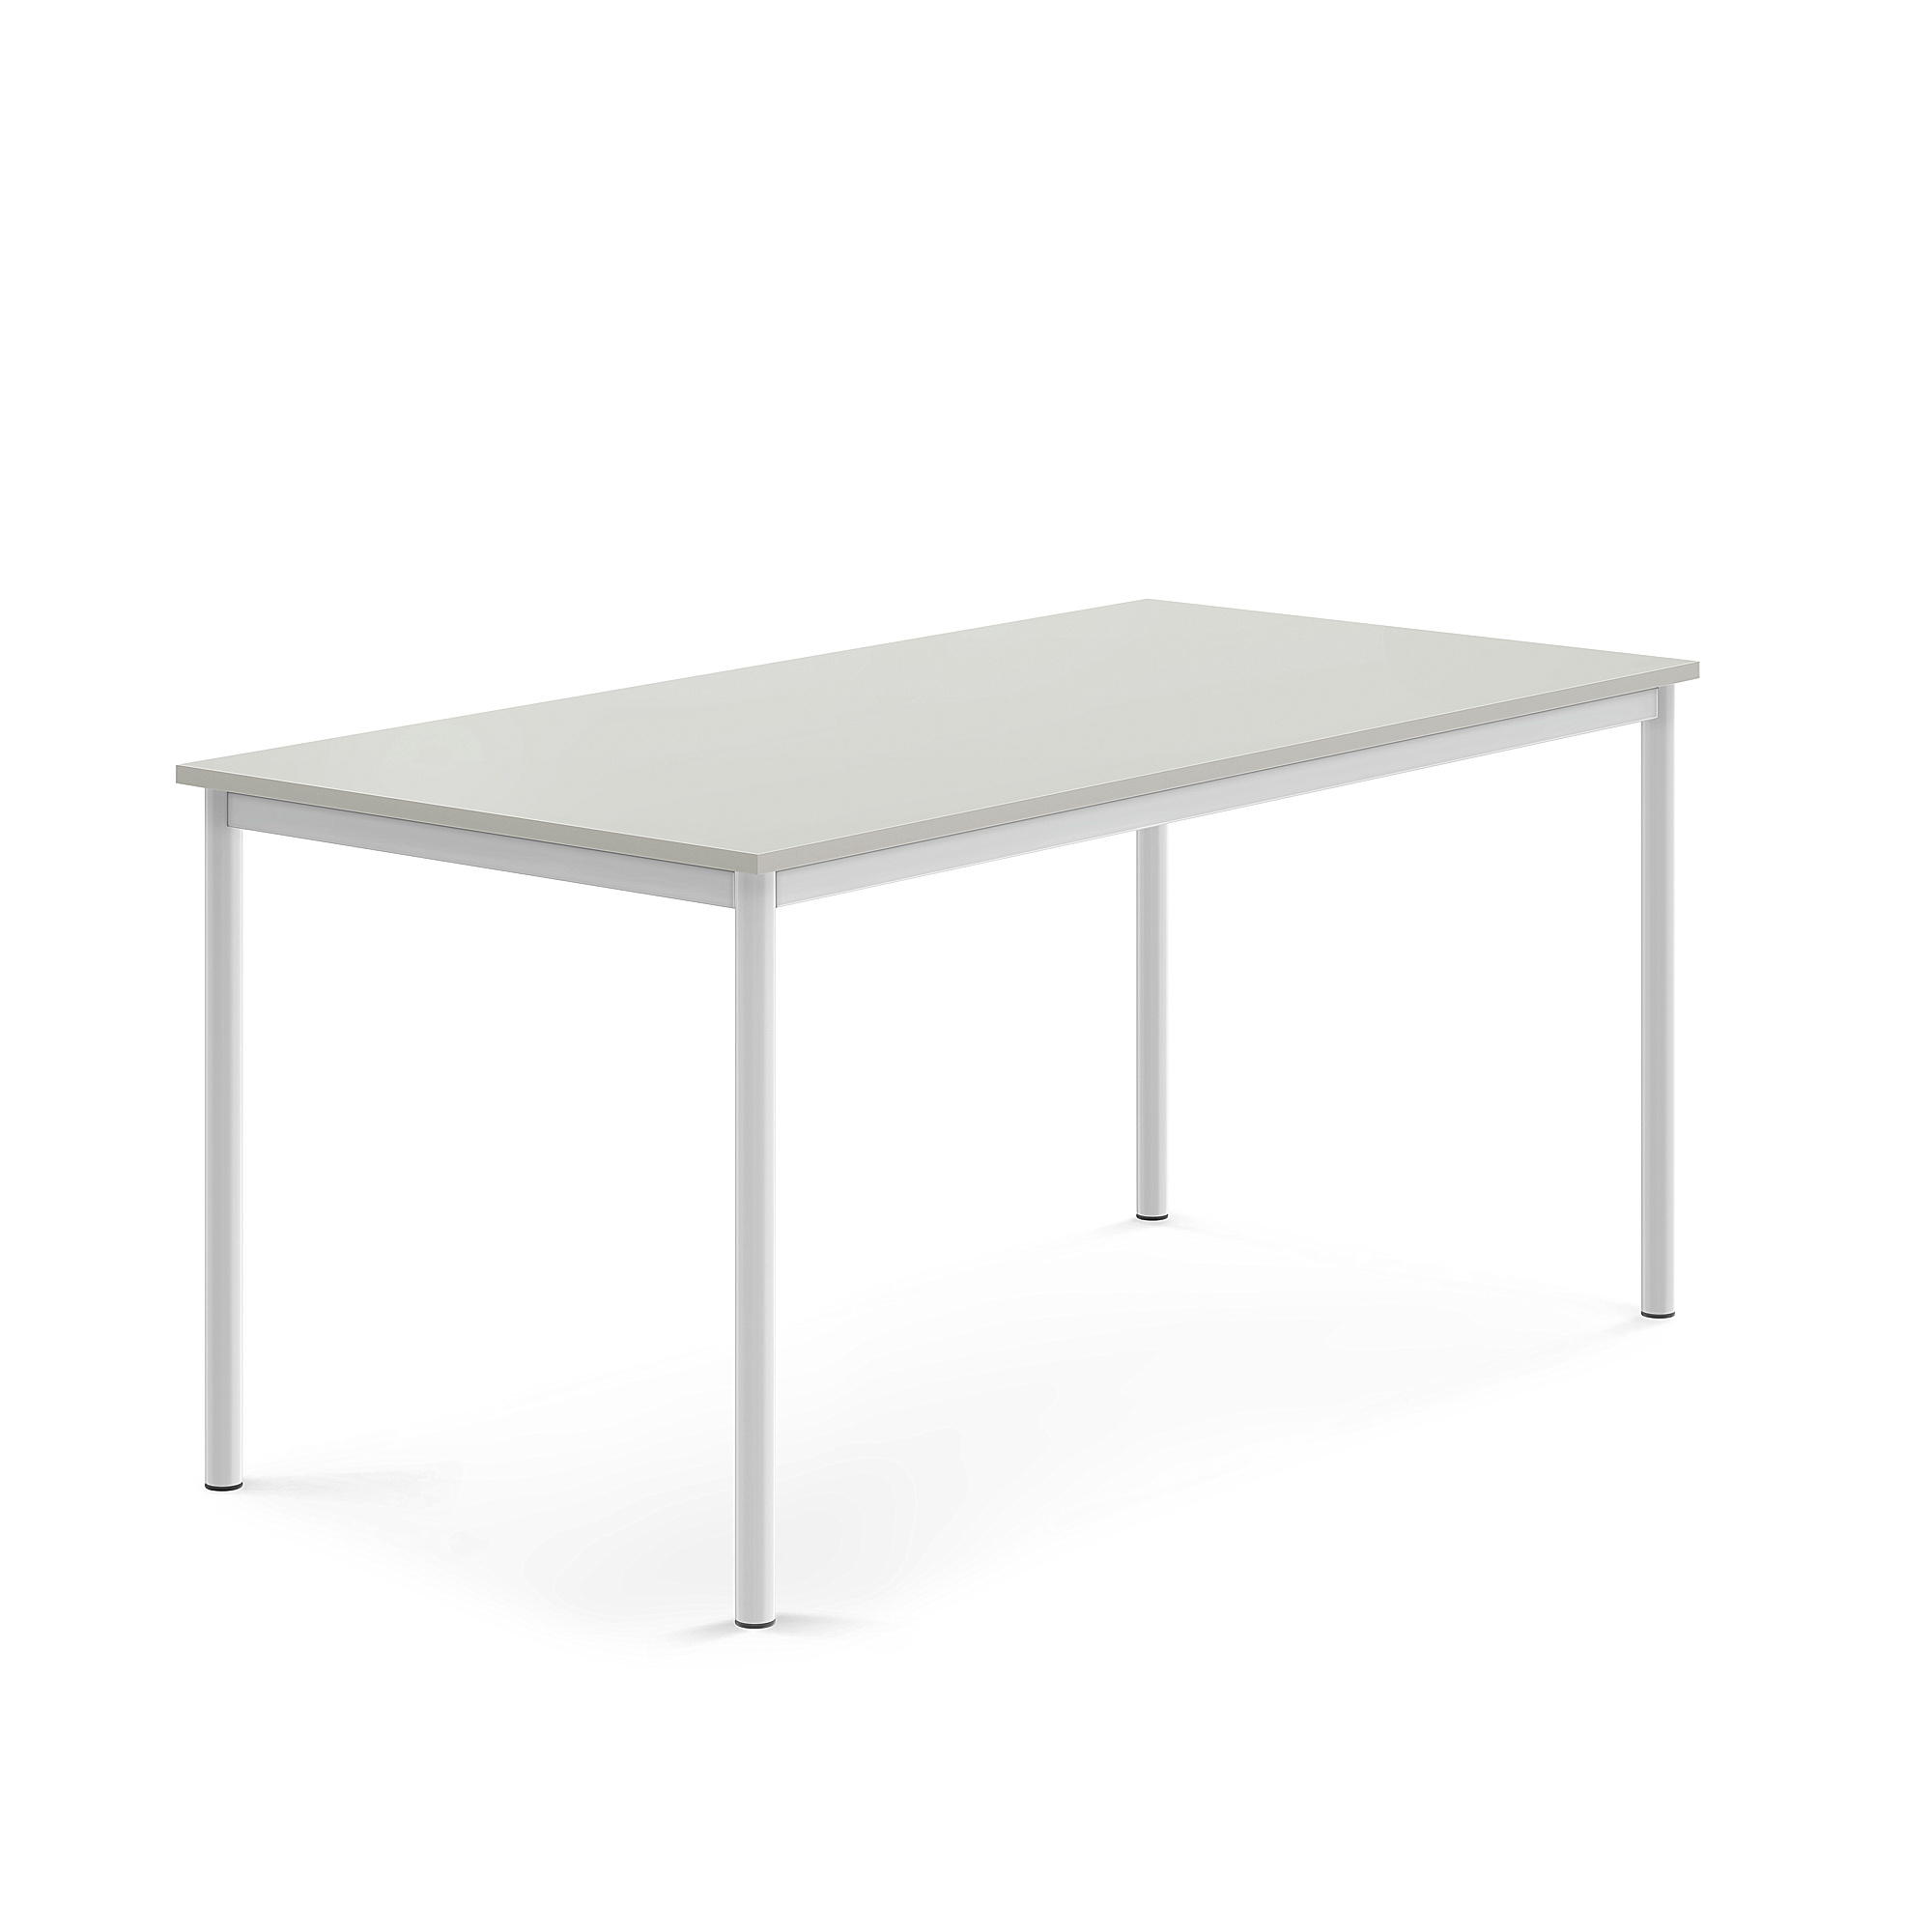 Stůl SONITUS, 1600x800x720 mm, bílé nohy, HPL deska tlumící hluk, šedá